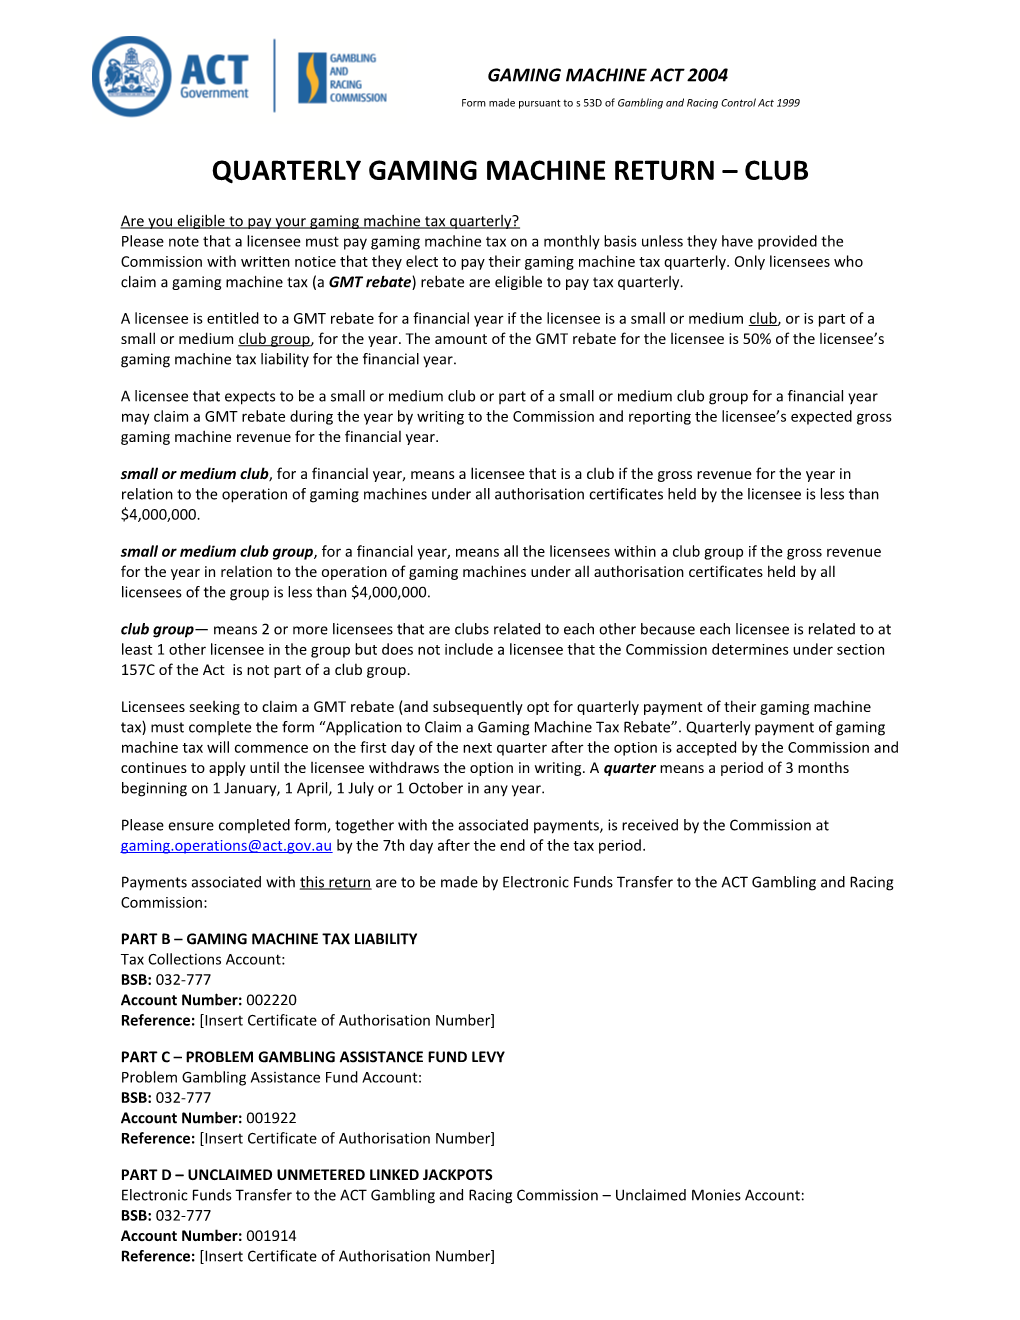 Quarterly Gaming Machine Return Club